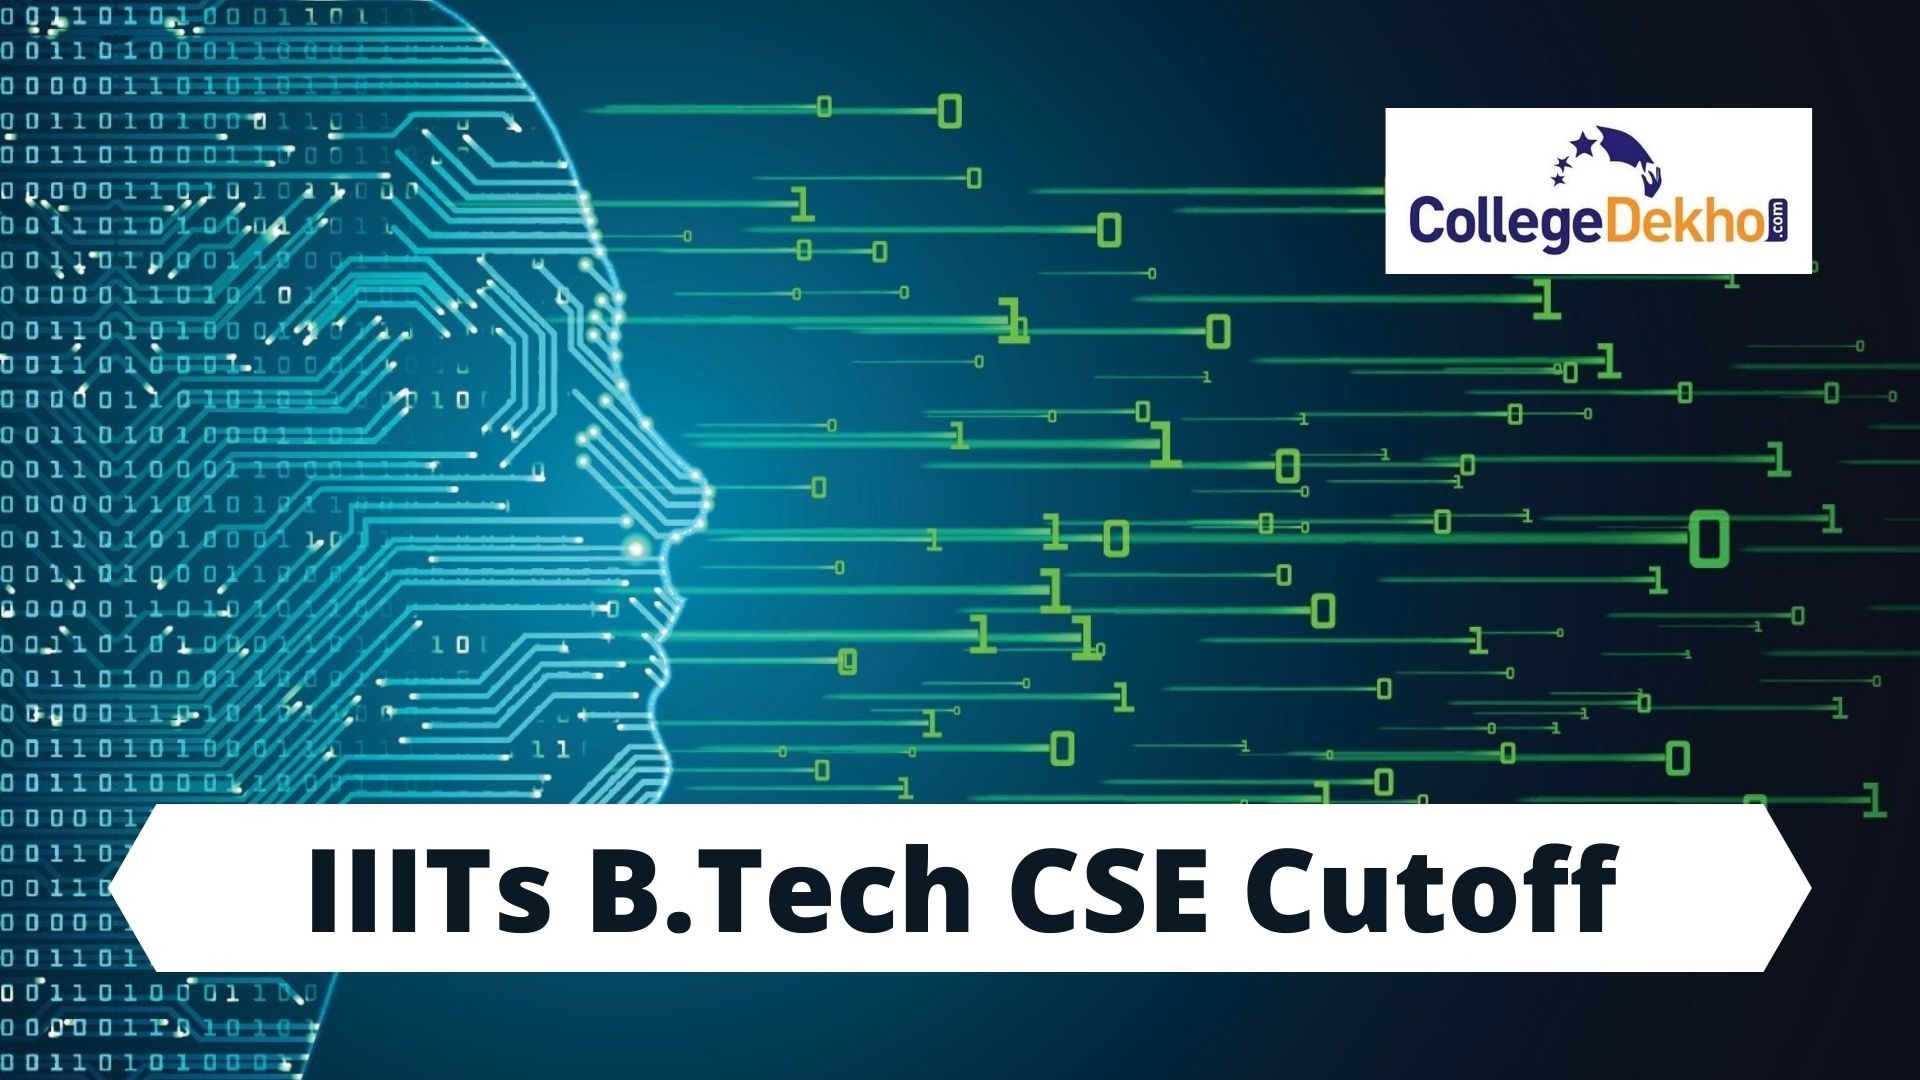 IIIT B.Tech CSE Cutoff 2022 - Check Opening & Closing Ranks